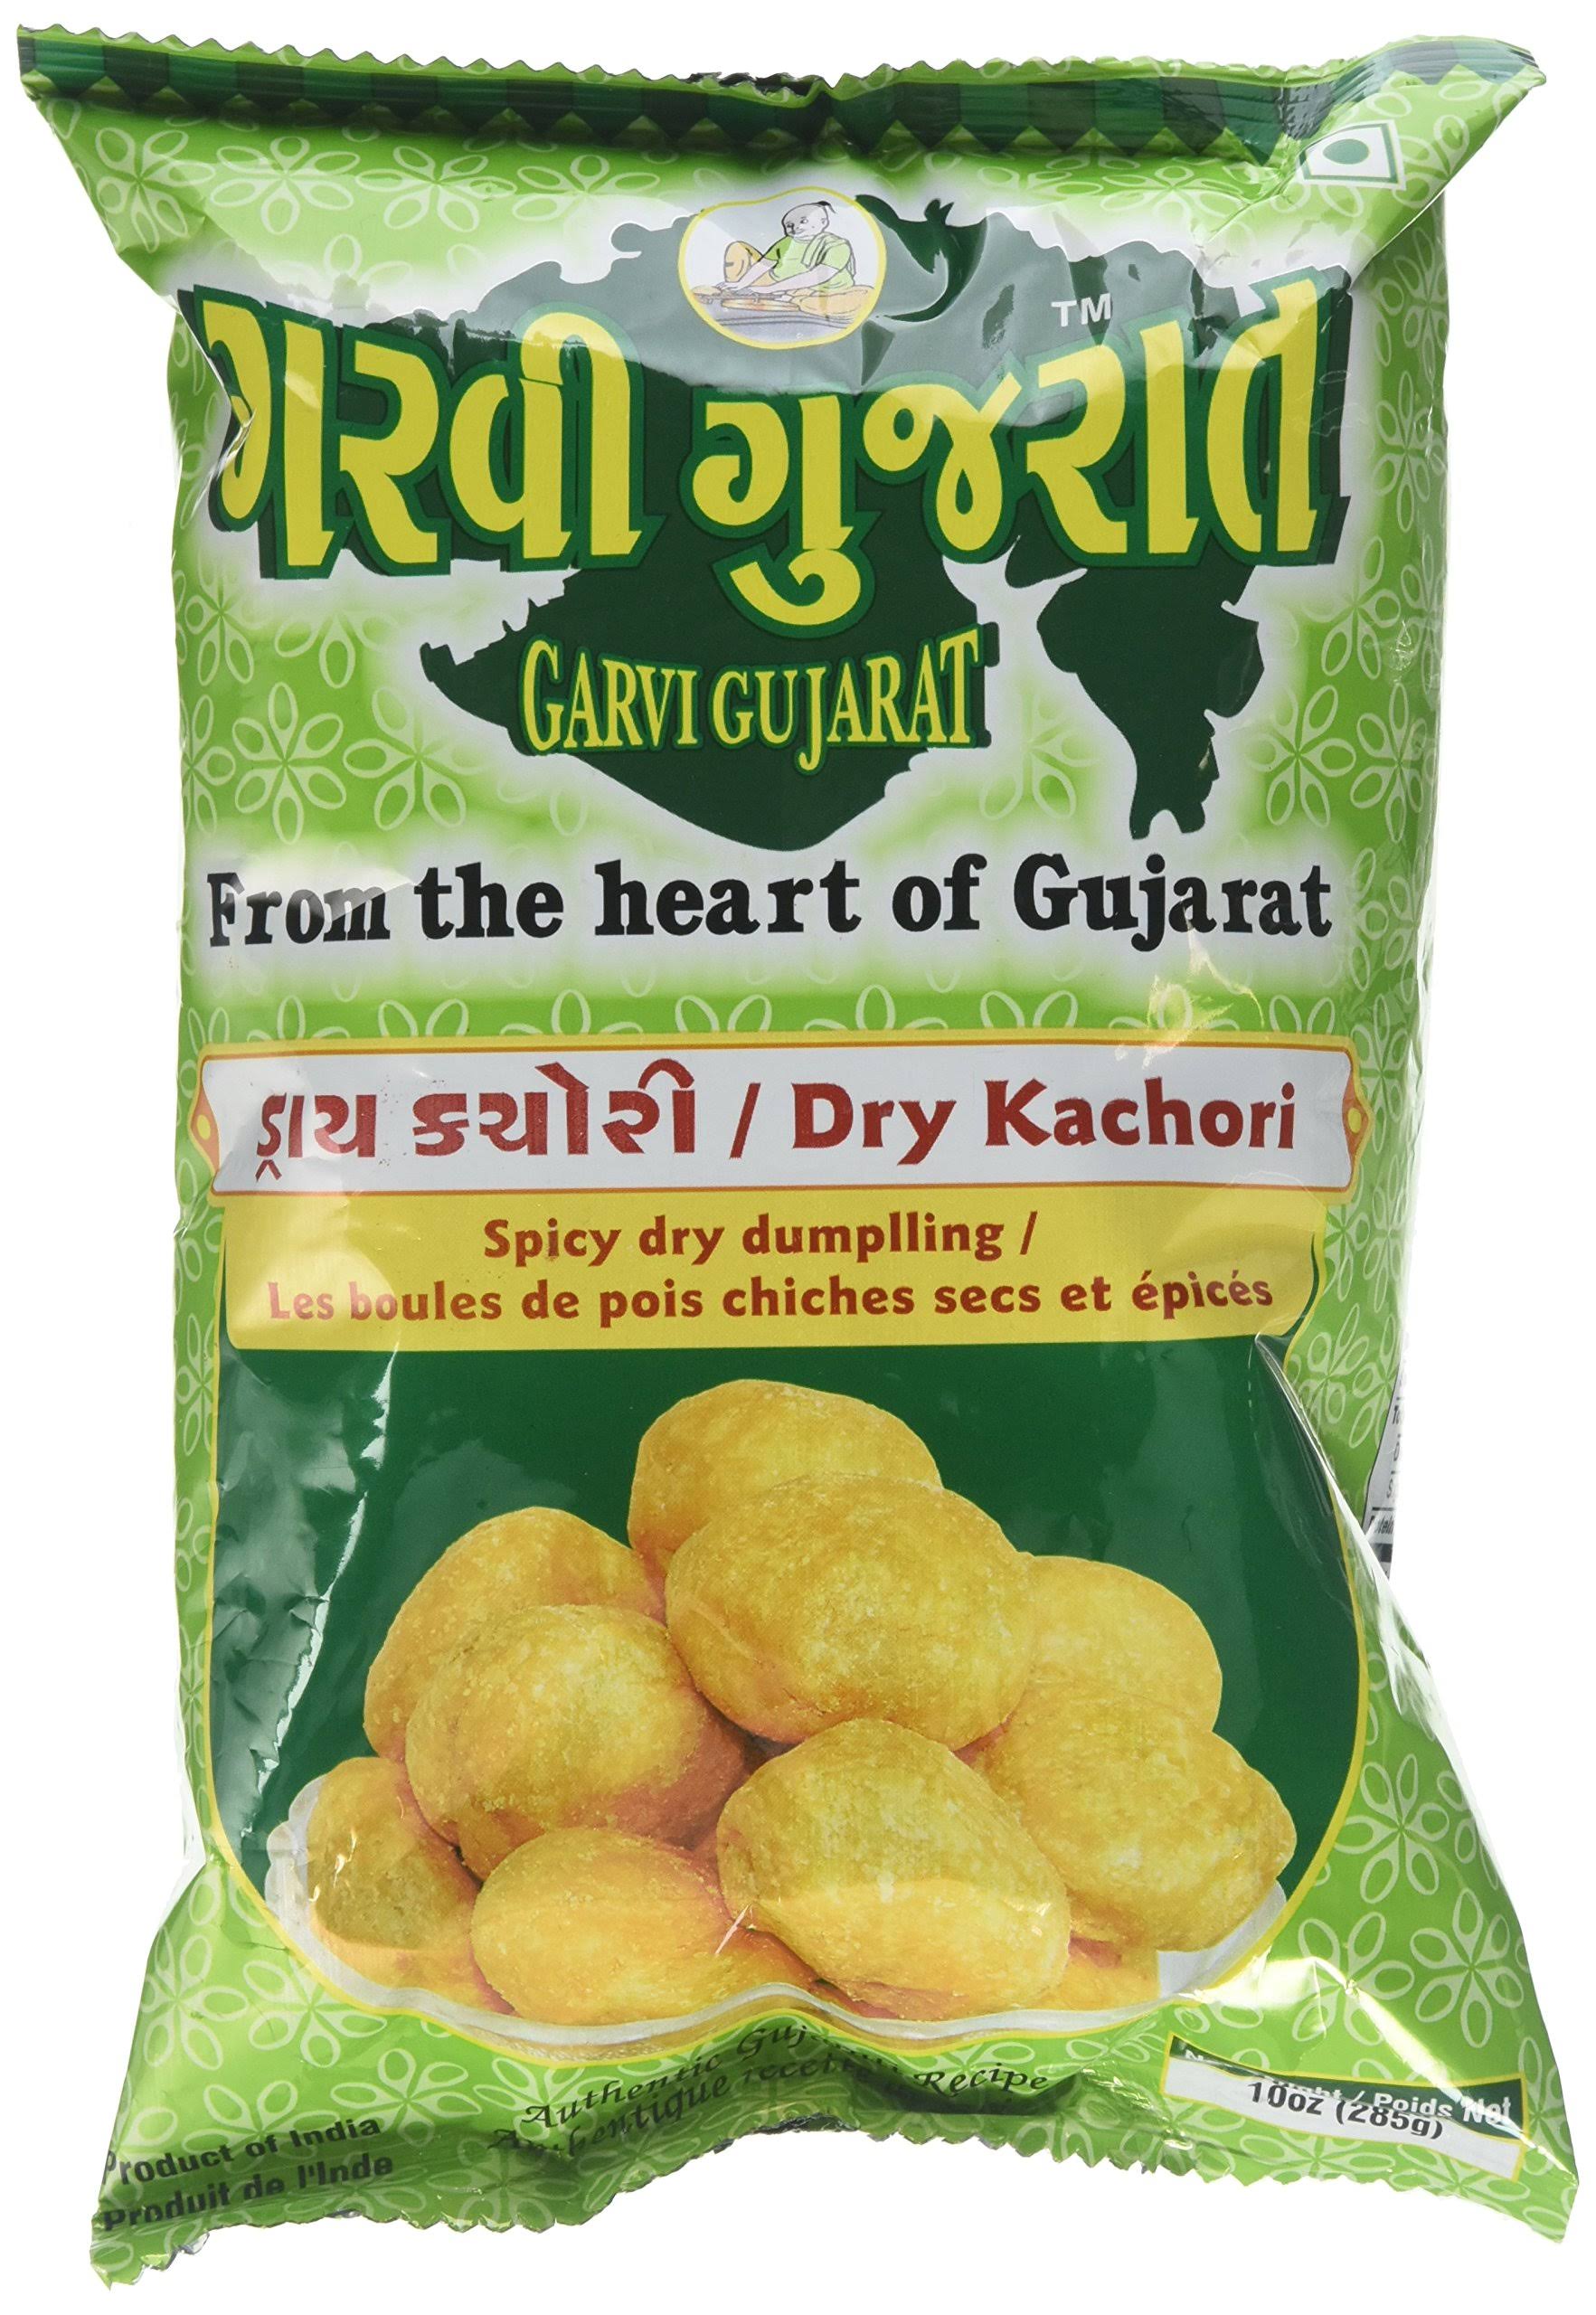 Garvi Gujarat Dry Kachori 280gm